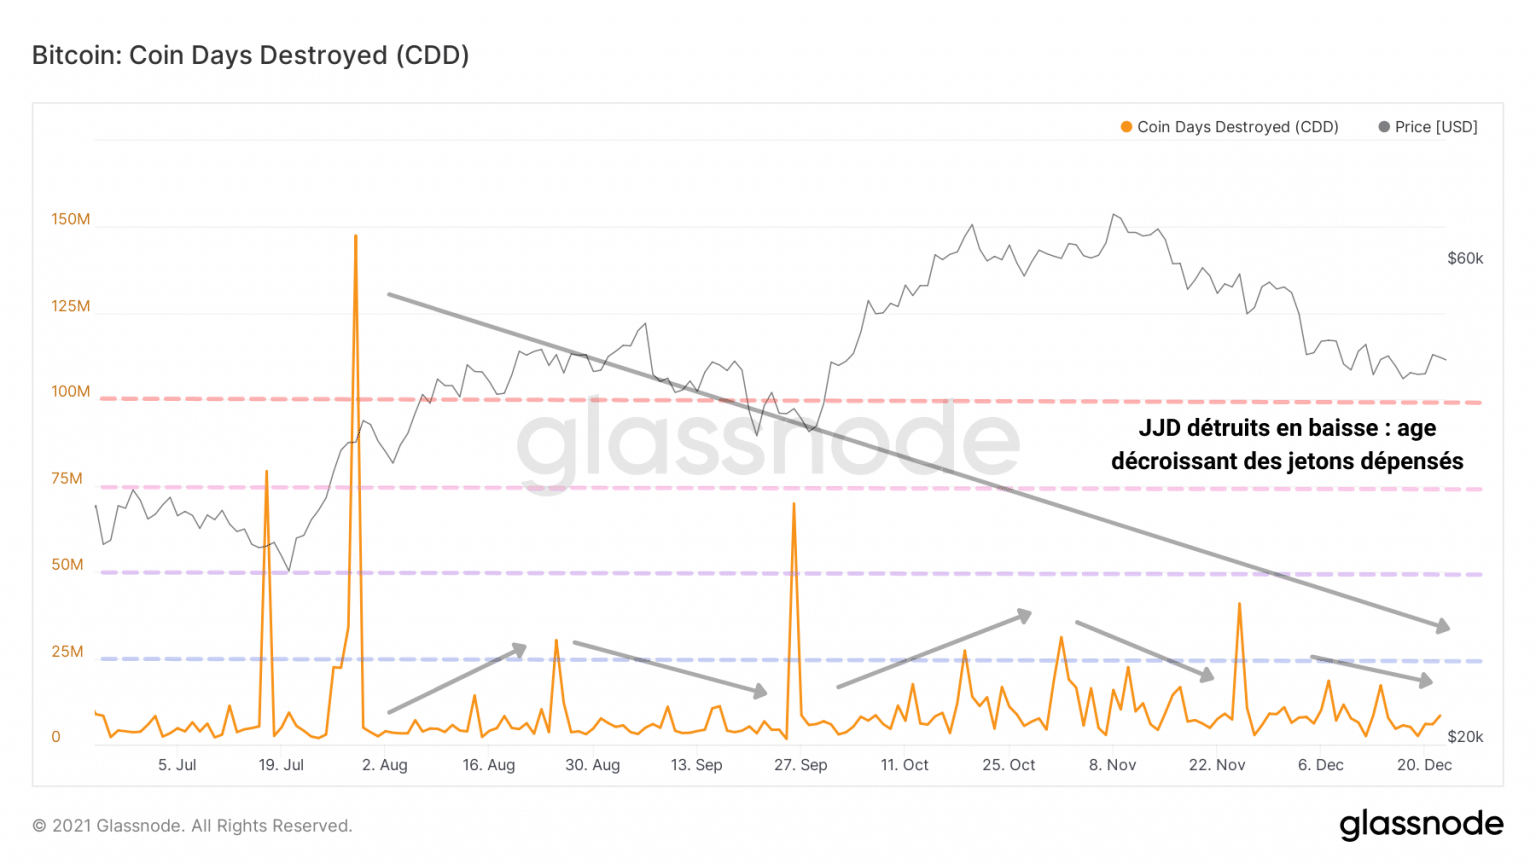 Graf účtu Bitcoin (BTC) JJD (Zdroj: Glassnode)